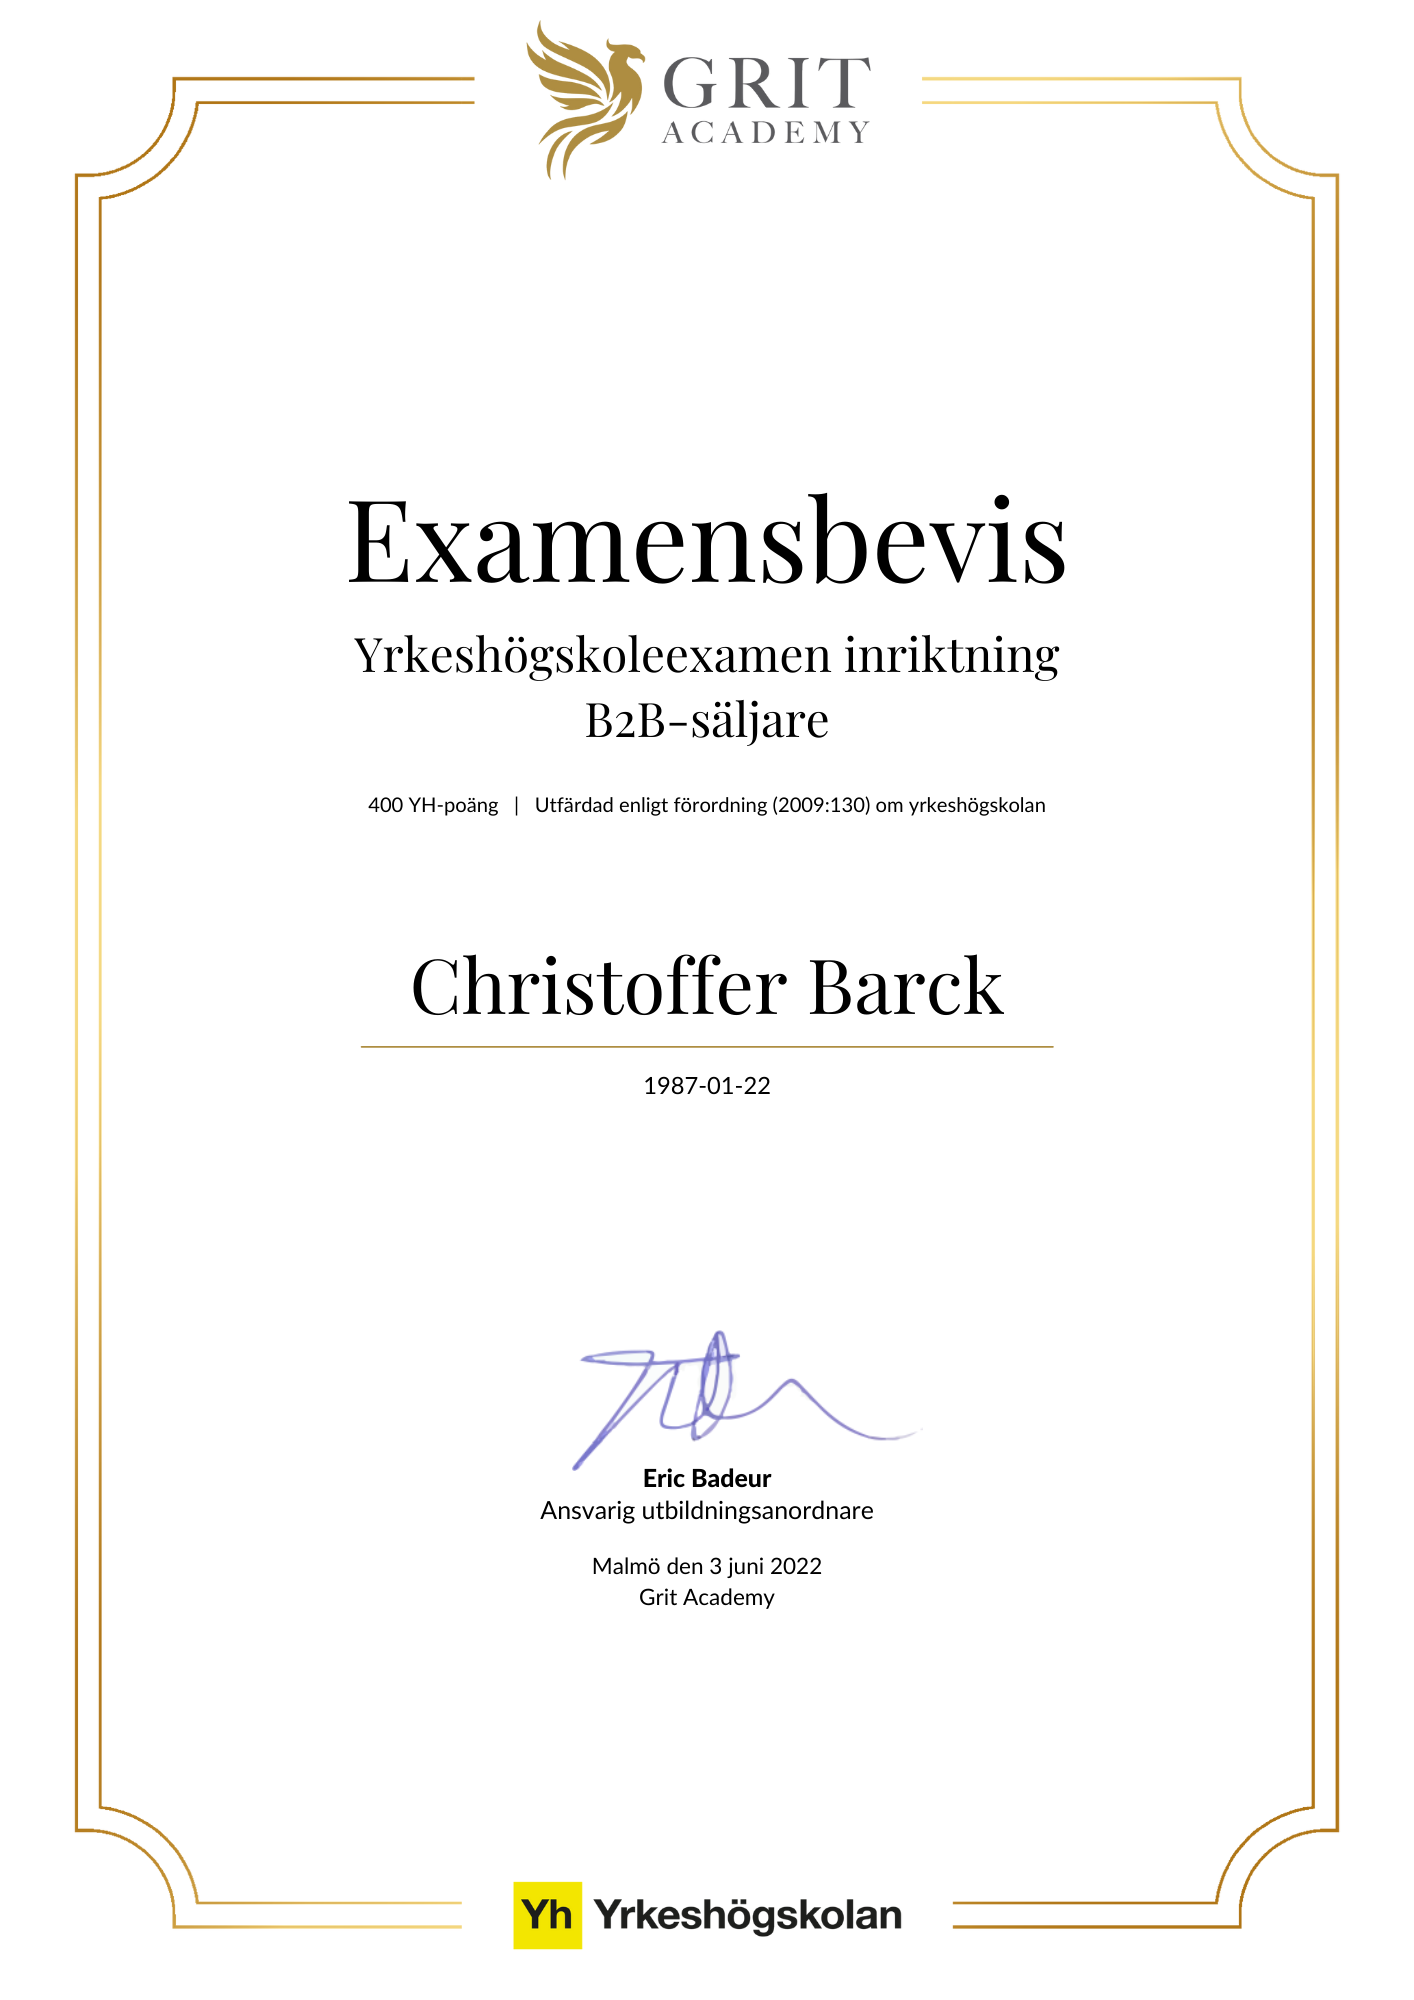 Examensbevis Christoffer Barck